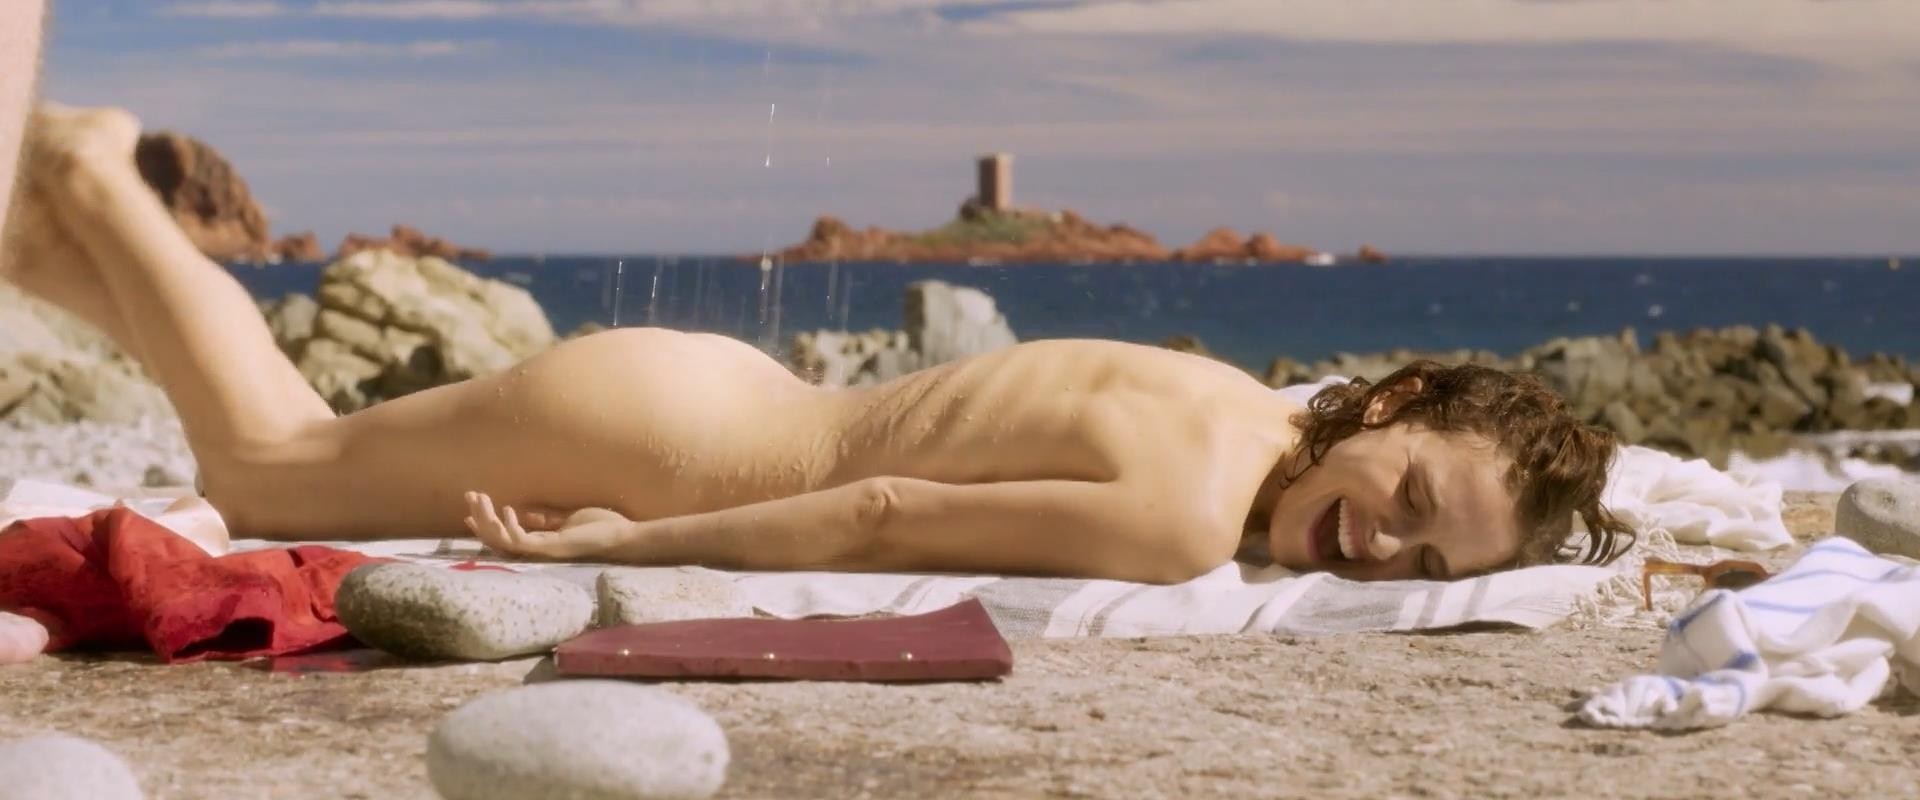 Natalie Portman Nude 2017